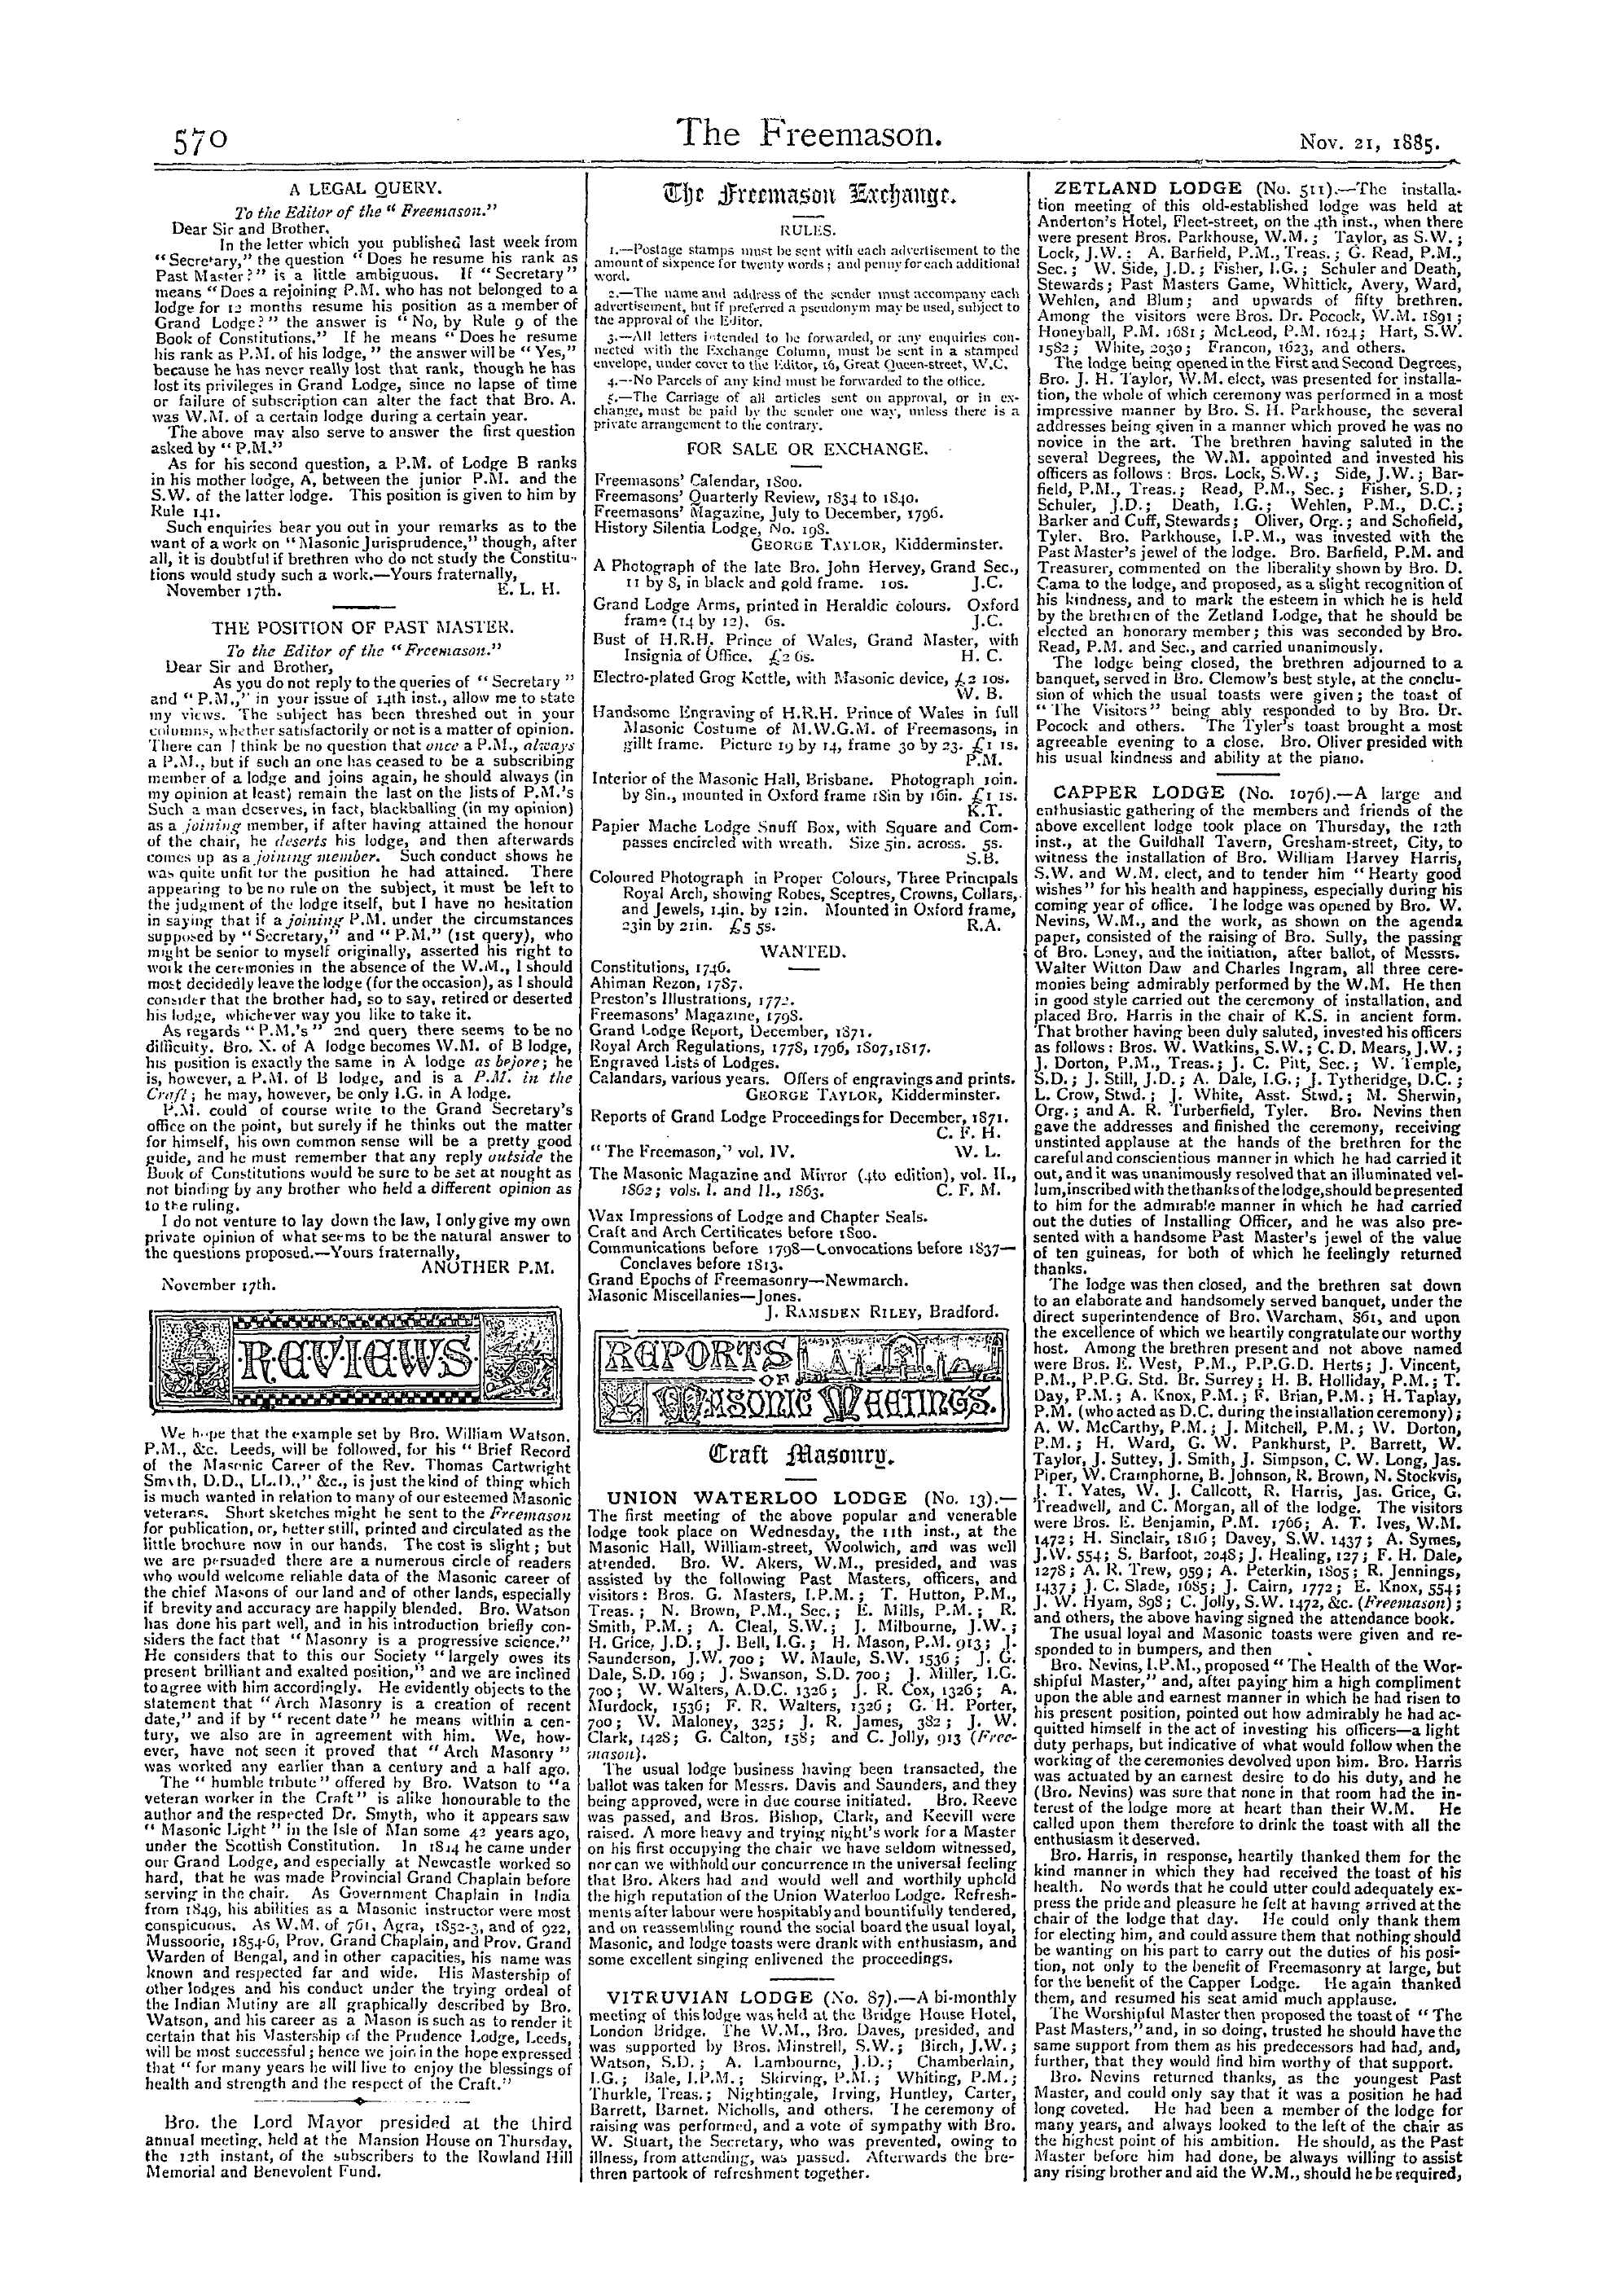 The Freemason: 1885-11-21 - Reviews